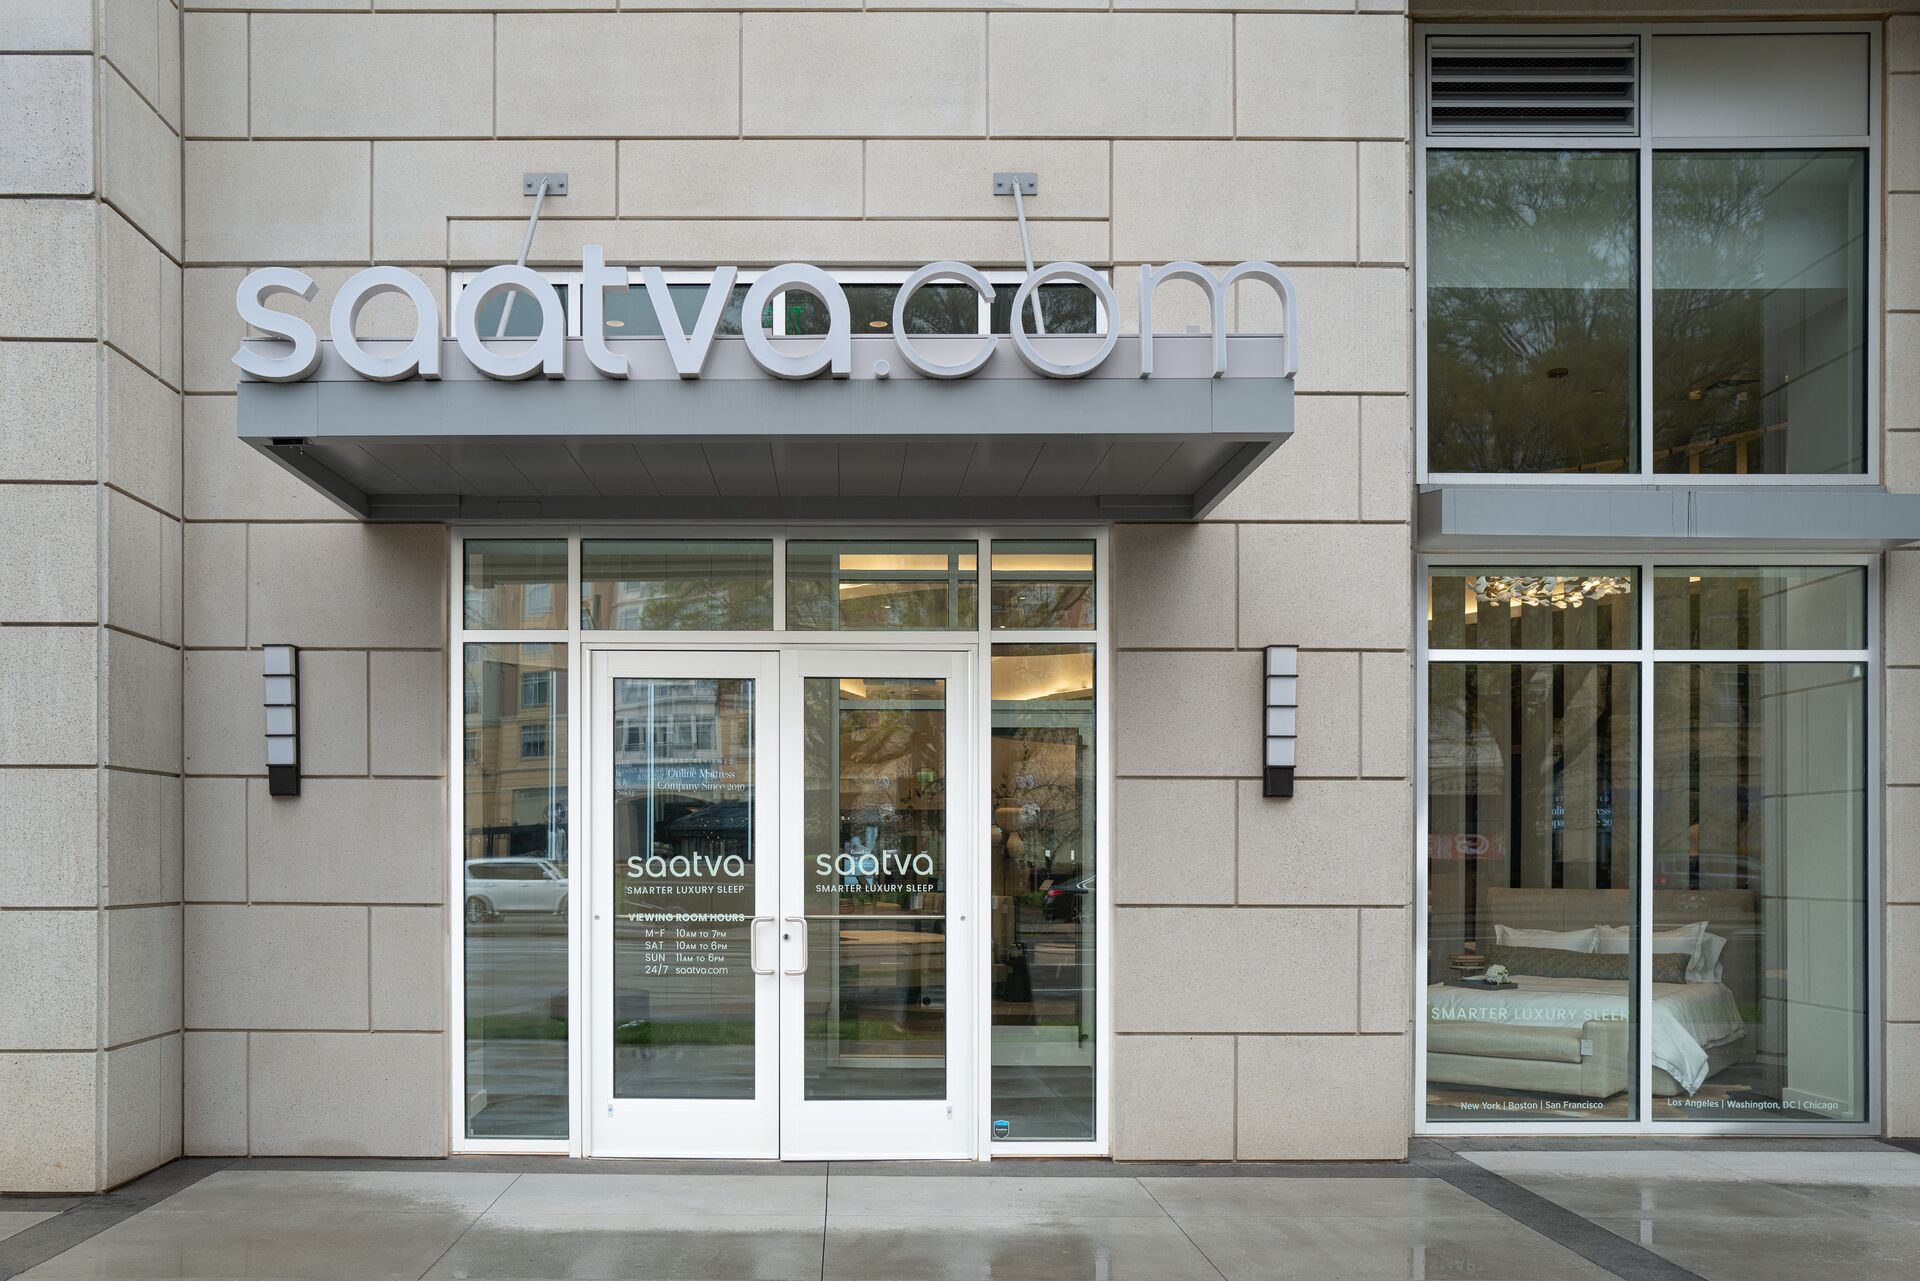 The modern, elegant facade of the Saatva Charlotte retail location.